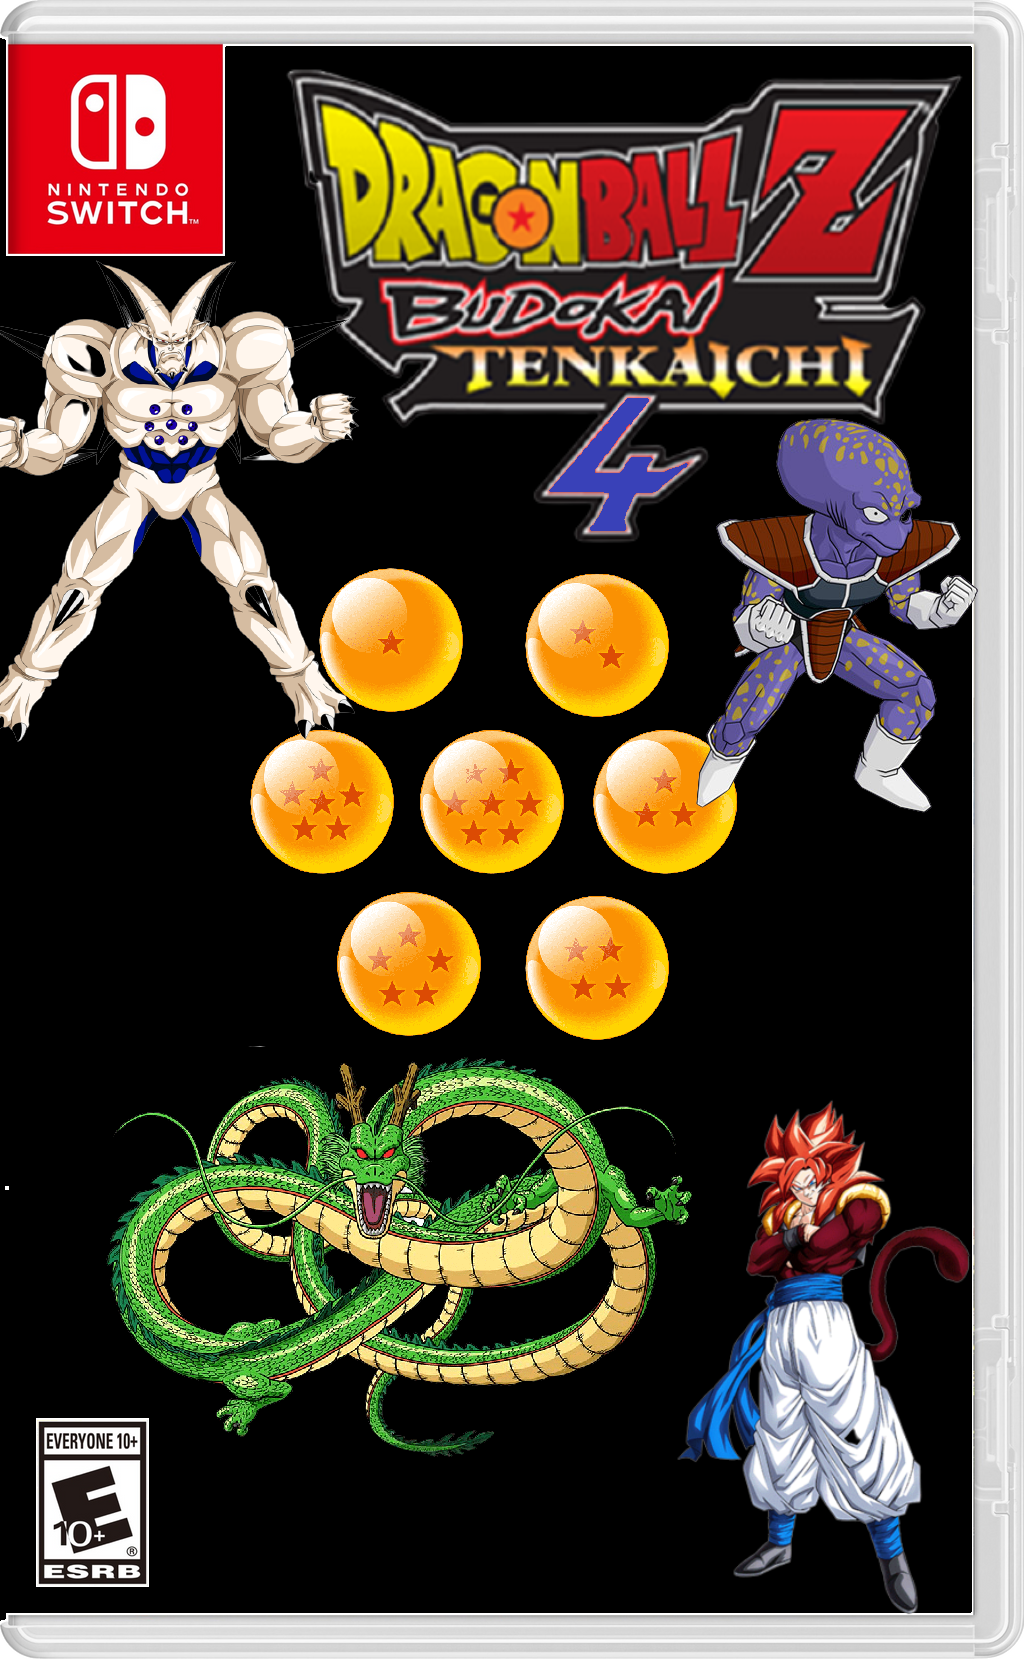 Evolution of Dragon Ball Games (1986-2023) #dragonball #dragonballgame, budokai tenkaichi 4